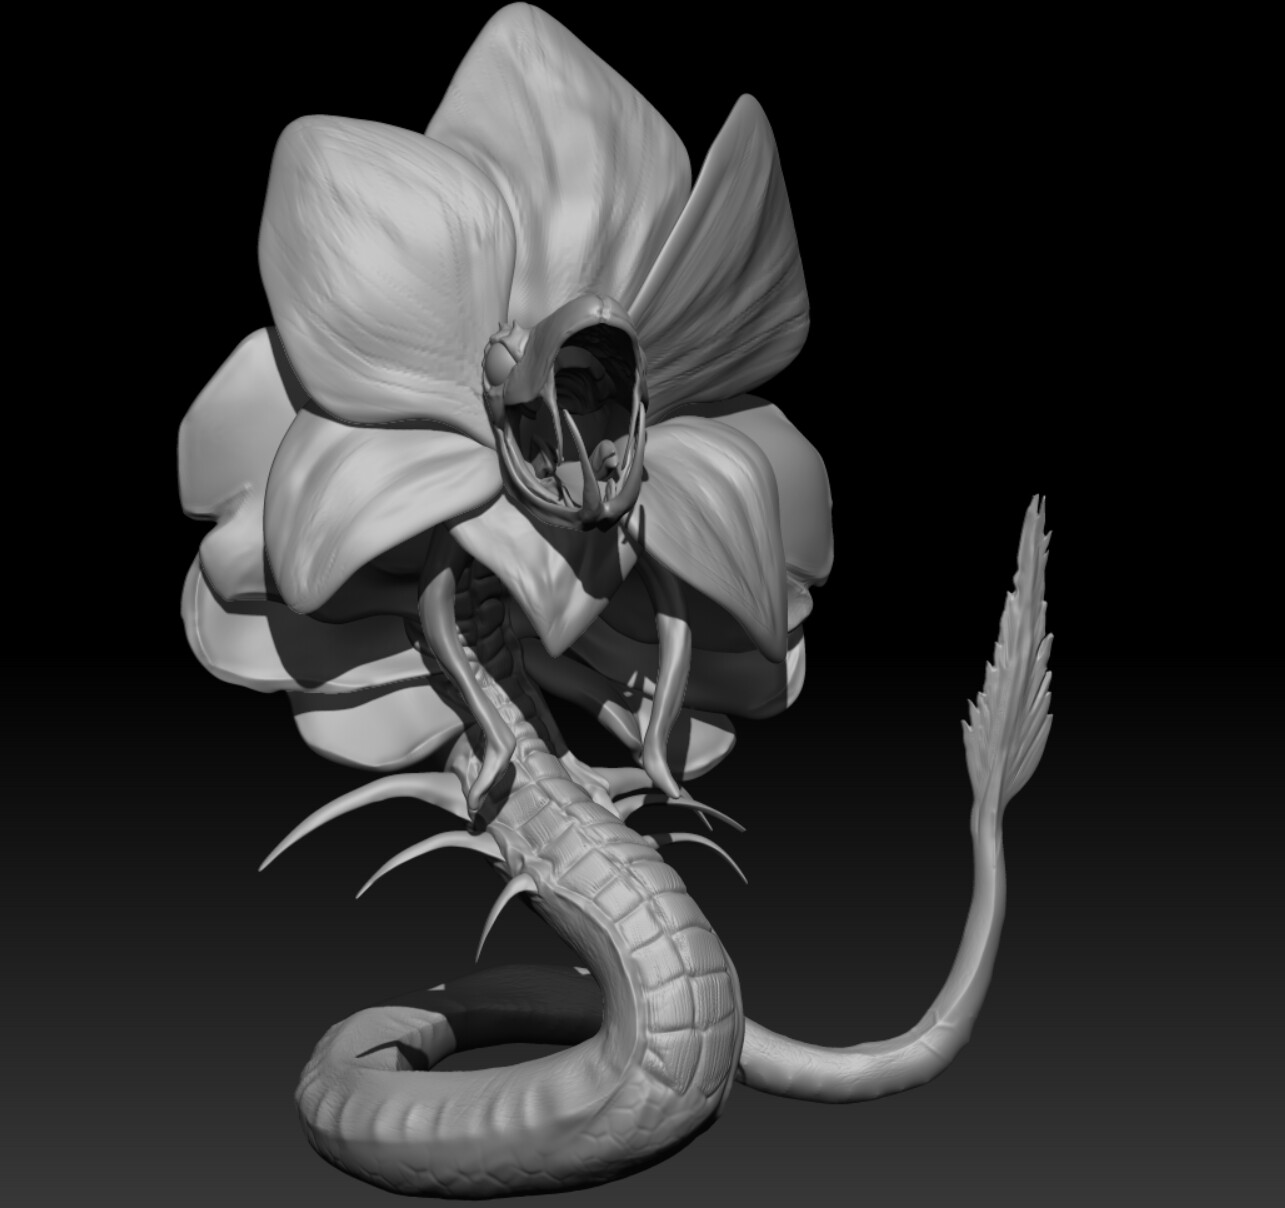 Flower And Snake